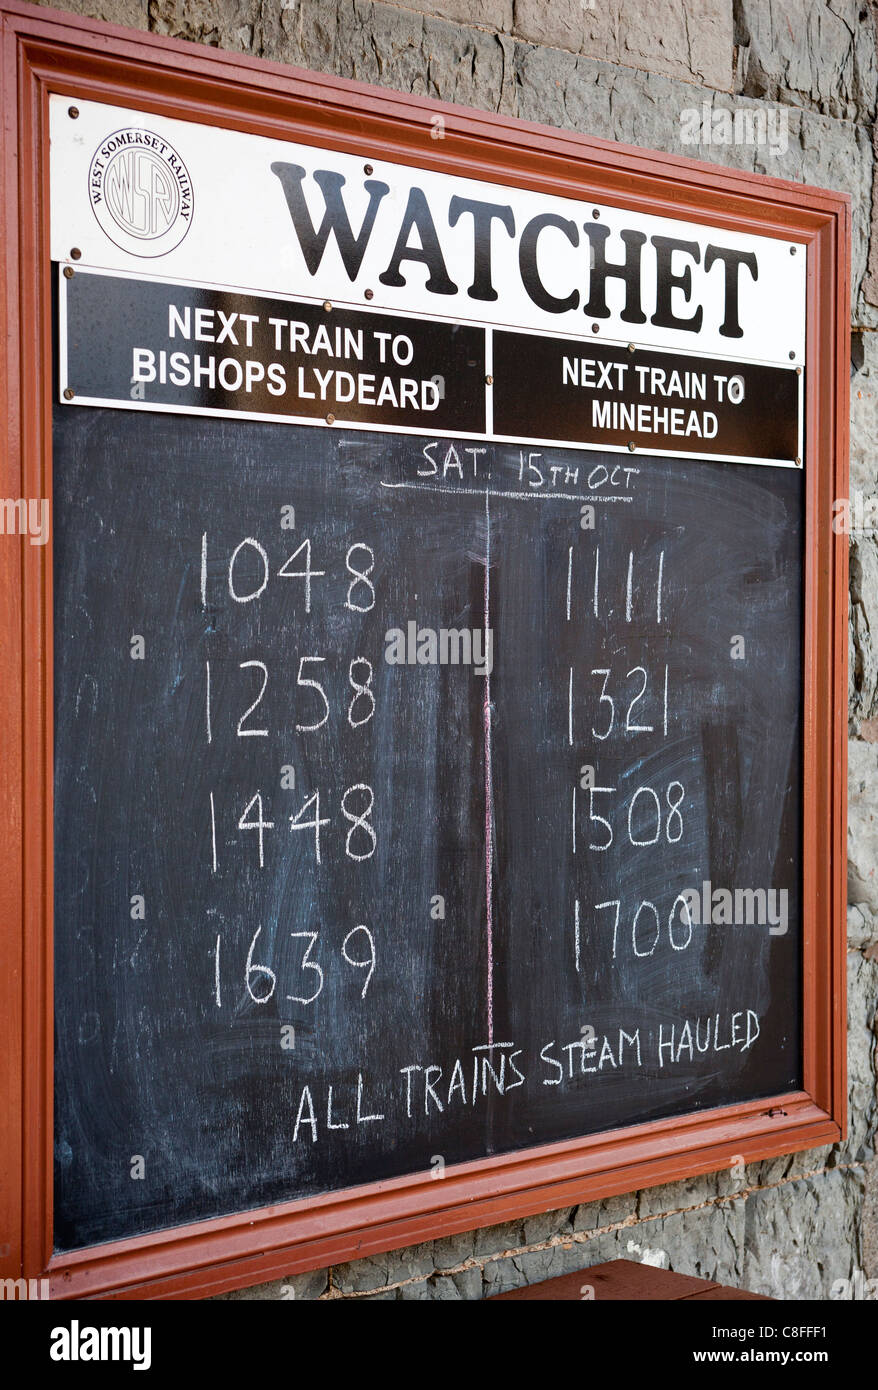 Train Station Sign West Somerset Railway Watchet Stock Photo